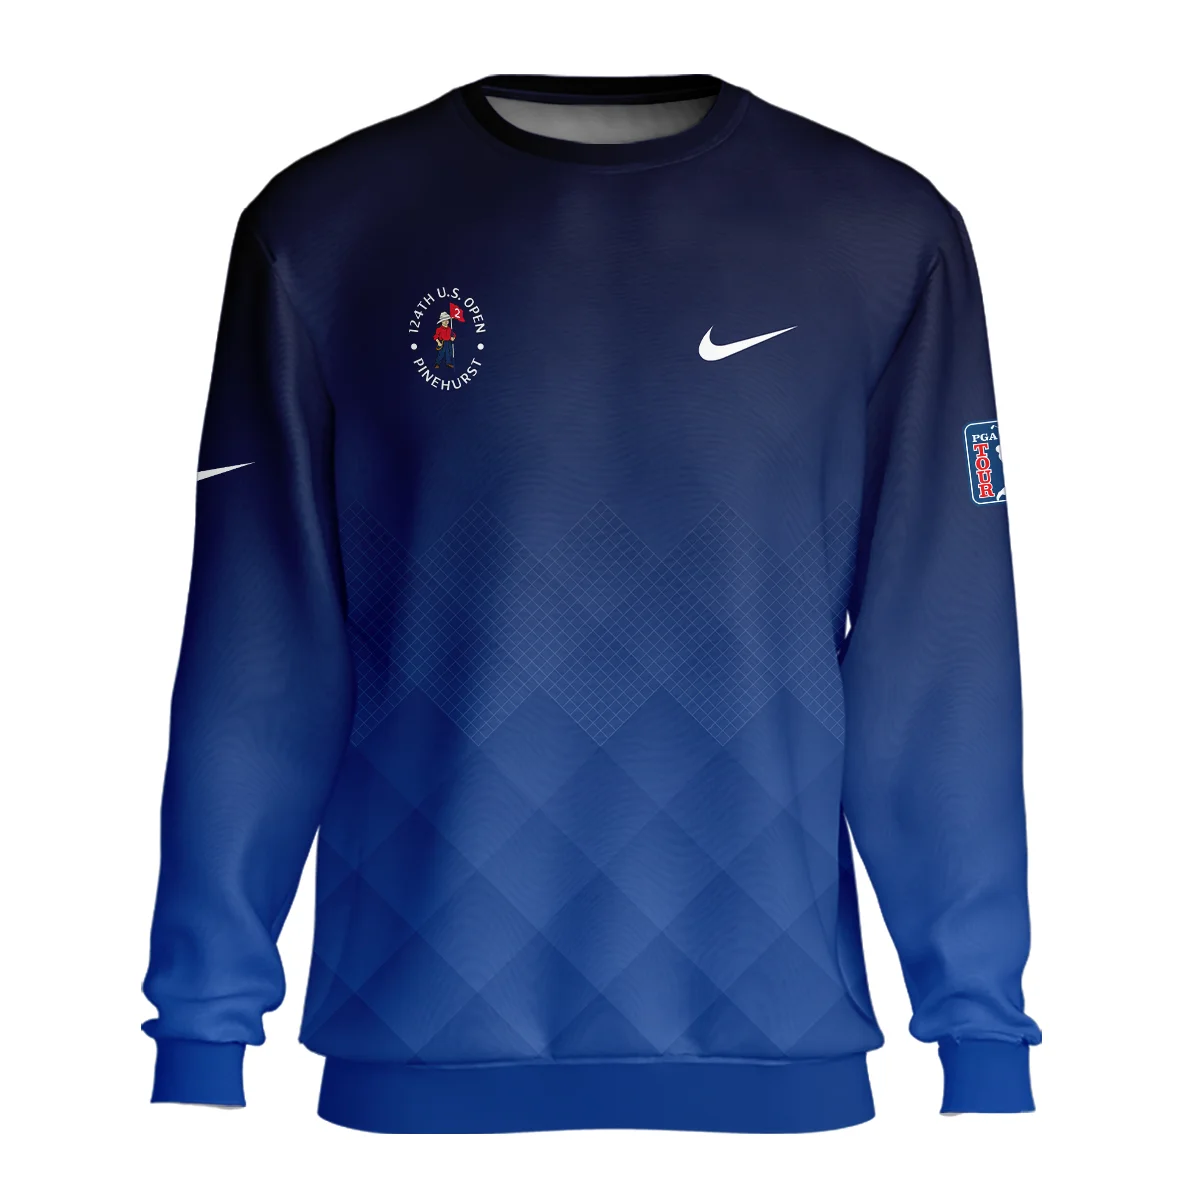 124th U.S. Open Pinehurst Nike Dark Blue Gradient Stripes Pattern Unisex Sweatshirt Style Classic Sweatshirt